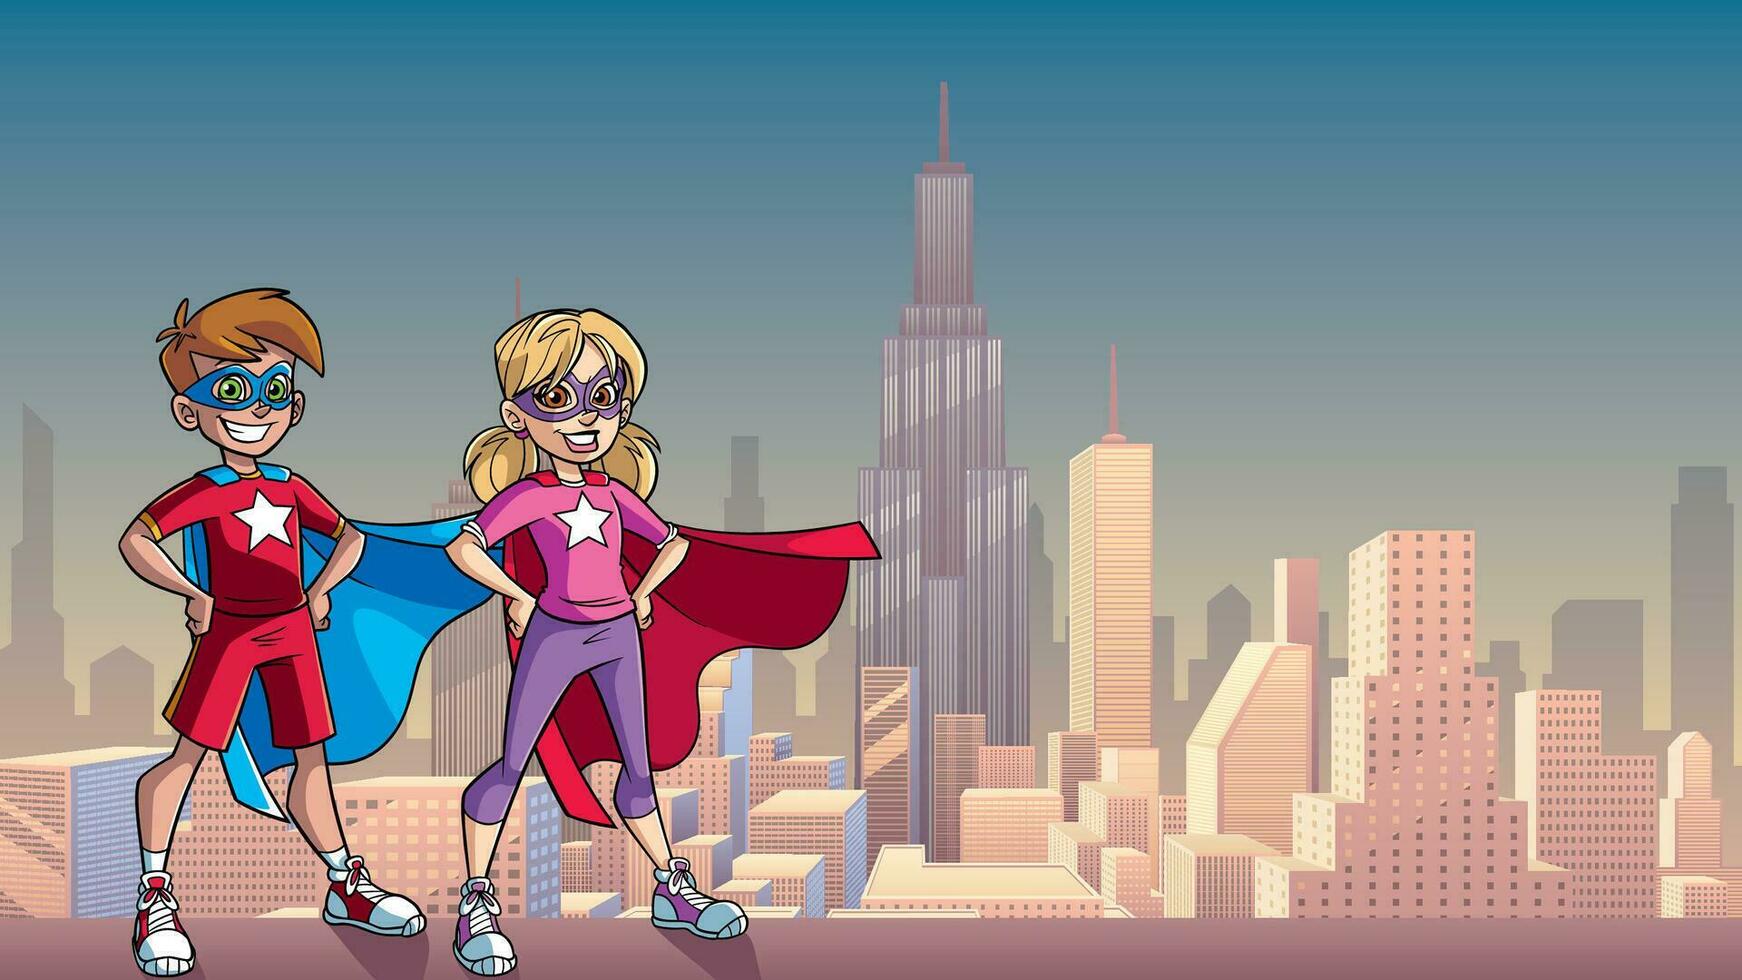 Little Super Kids City Background vector